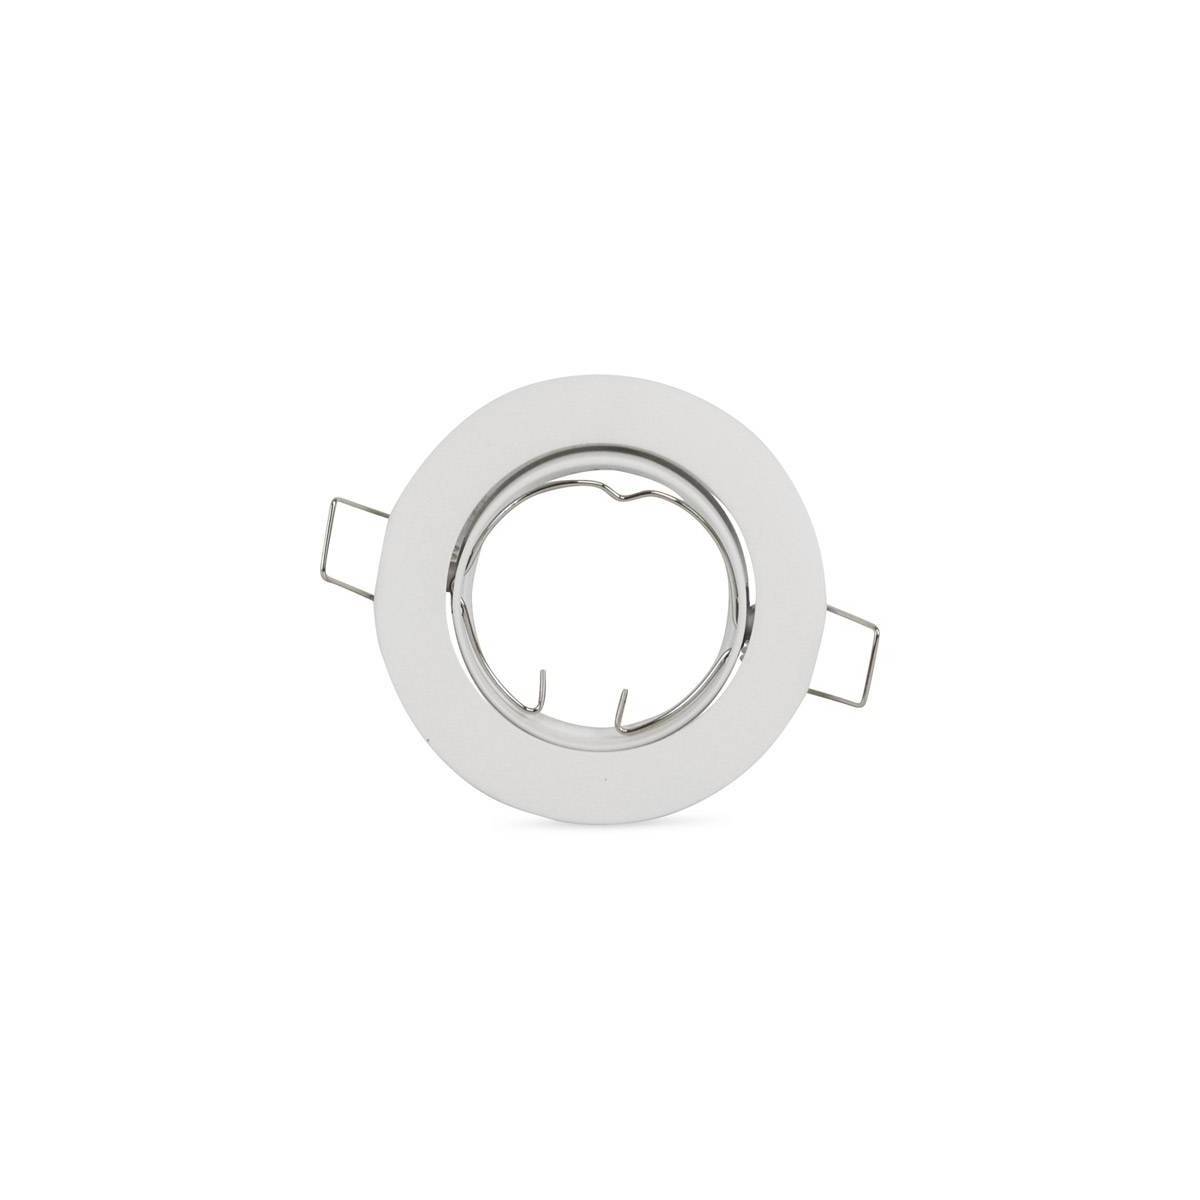 Aro downlight encastrável circular basculante para lâmpada GU10 / GU5.3